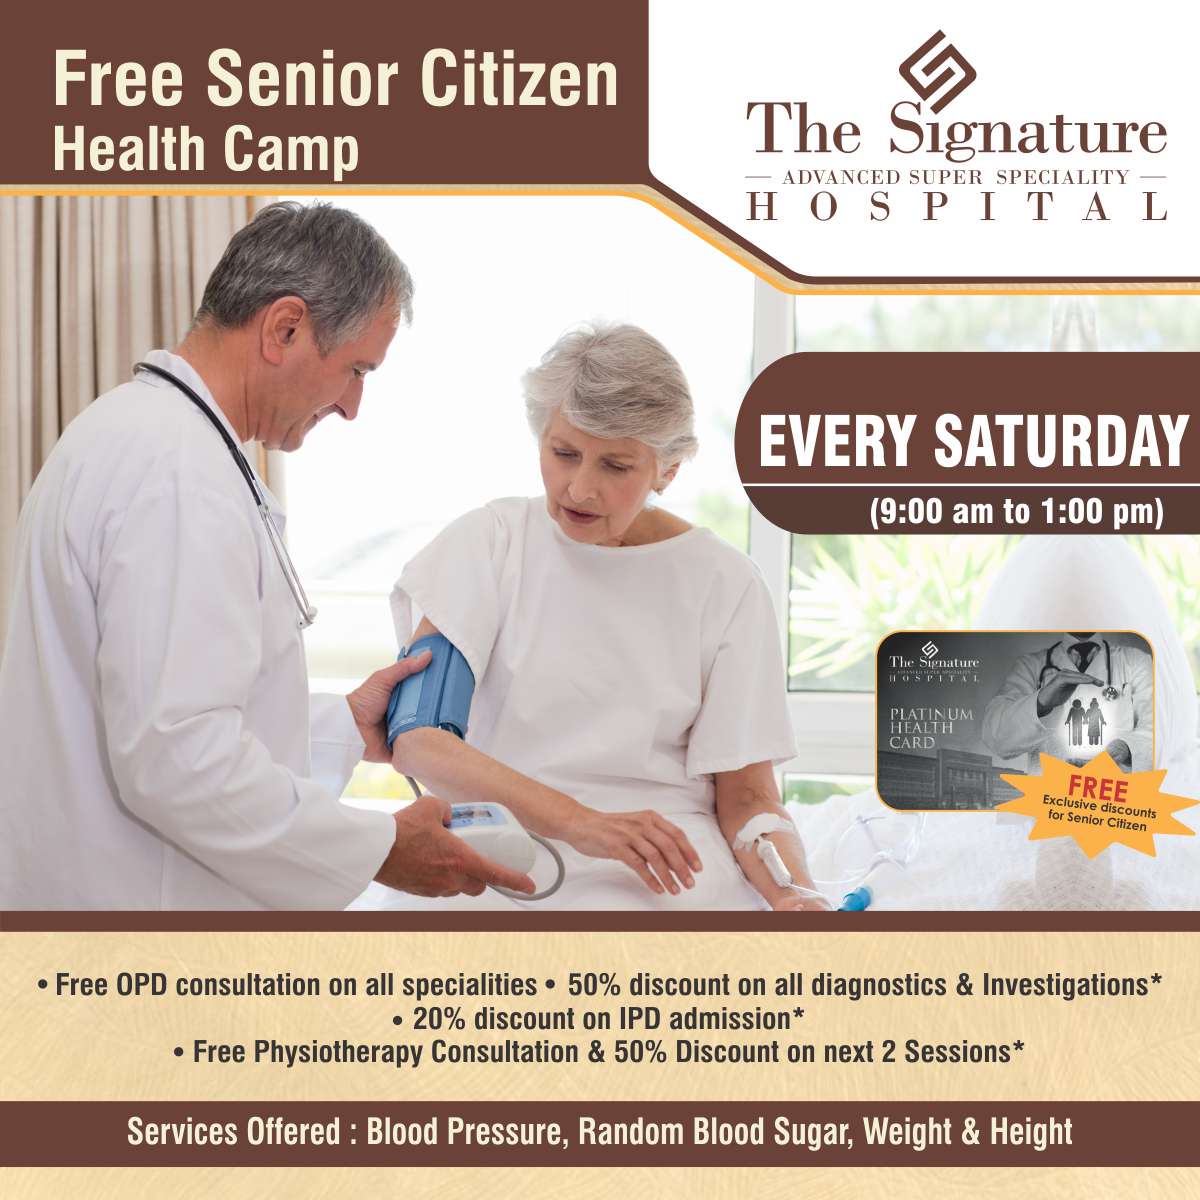 Free Senior Citizen Health Camp